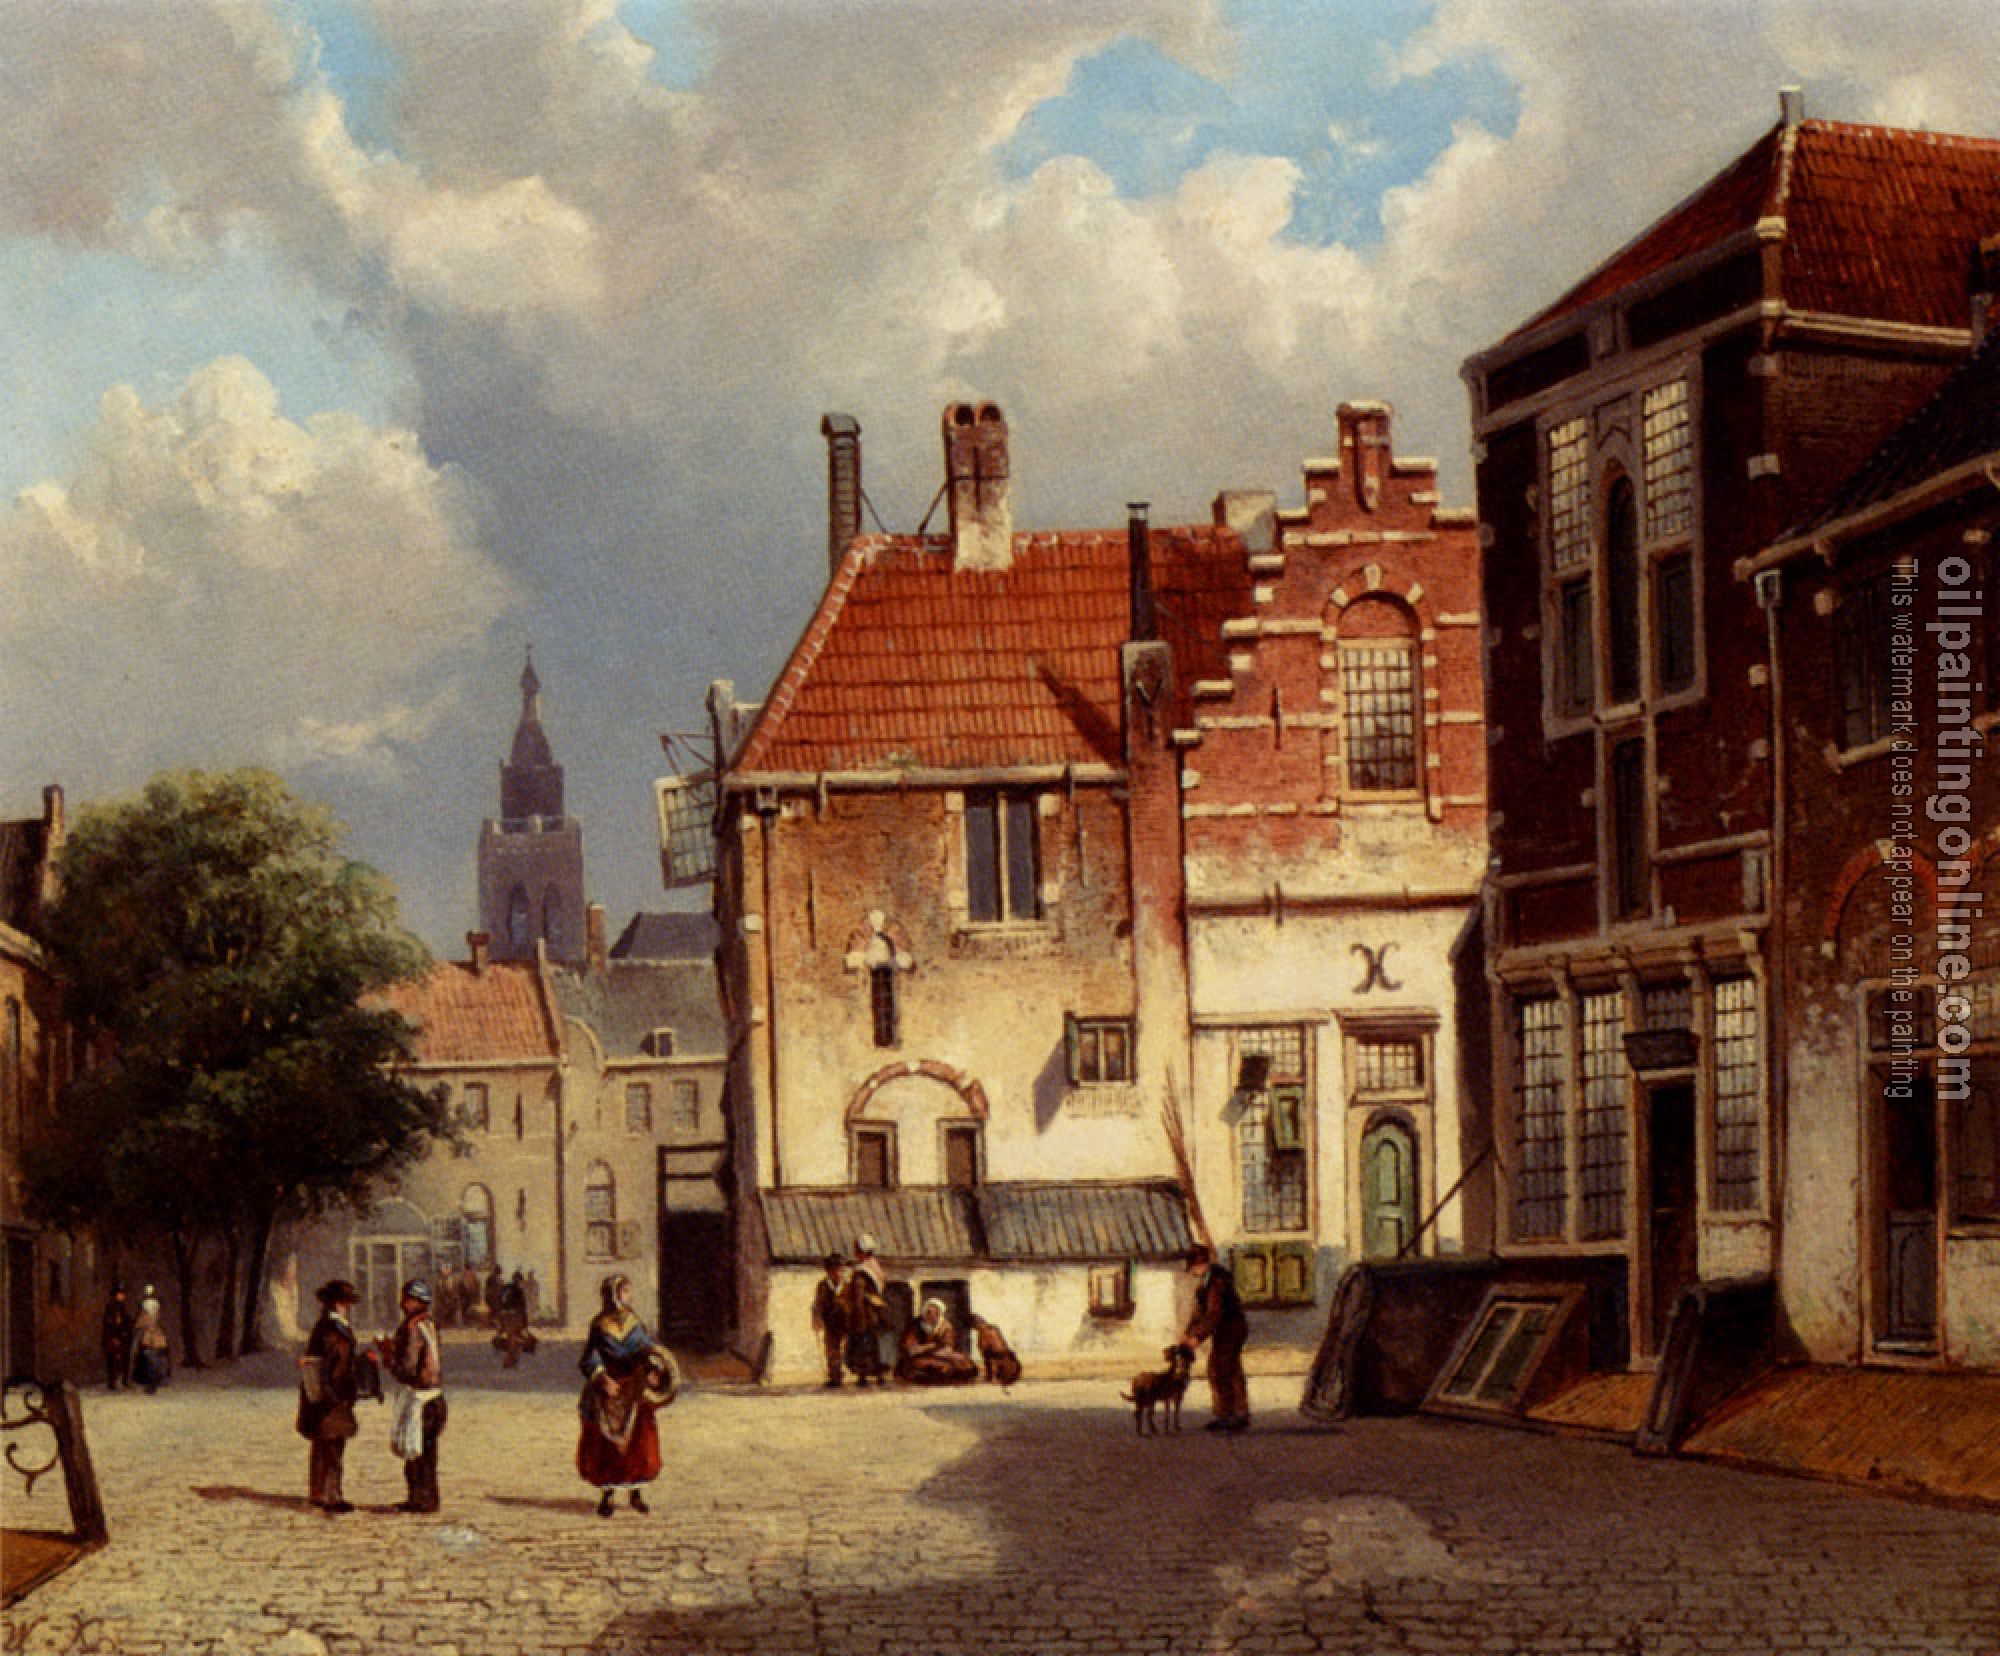 Willem Koekkoek - Town Square